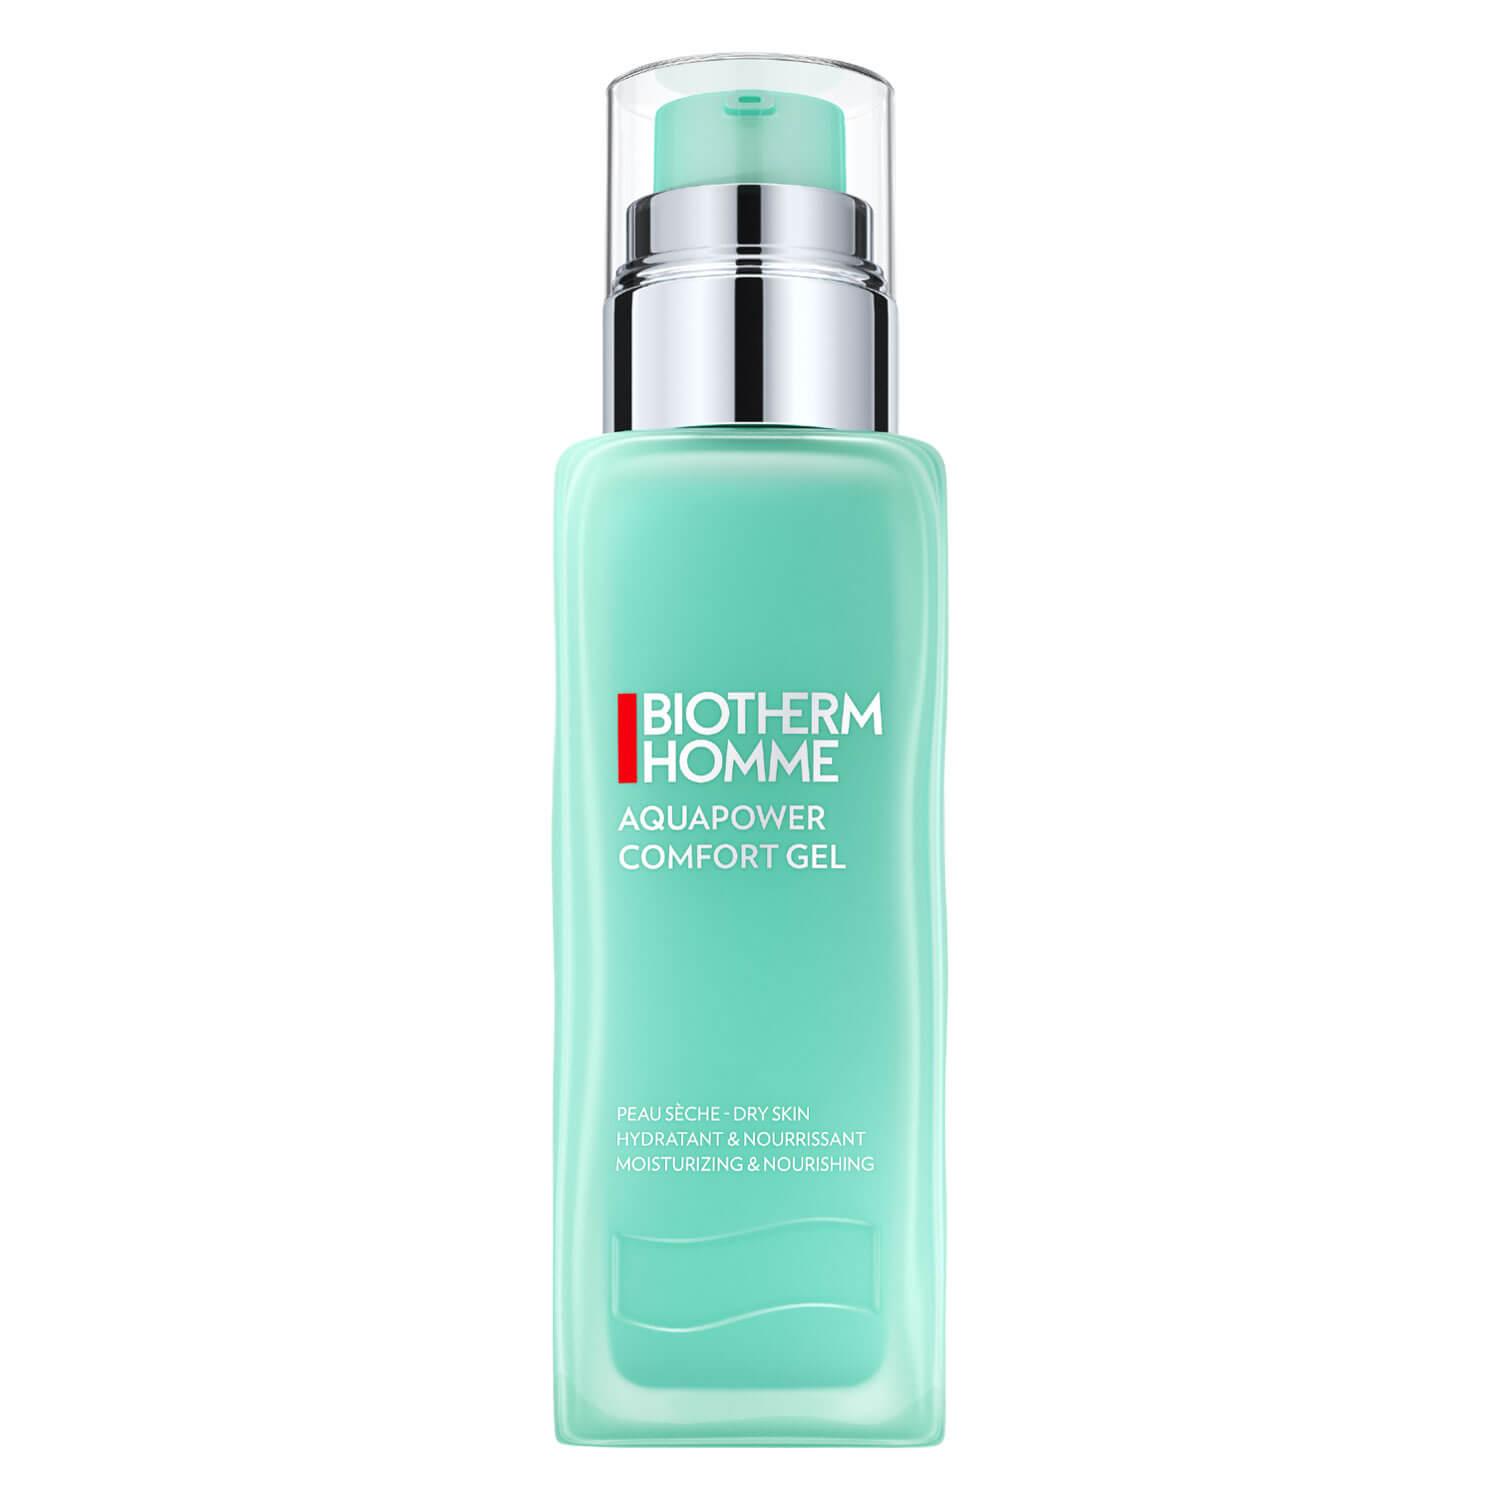 Biotherm Homme - Aquapower Comfort Gel Dry Skin